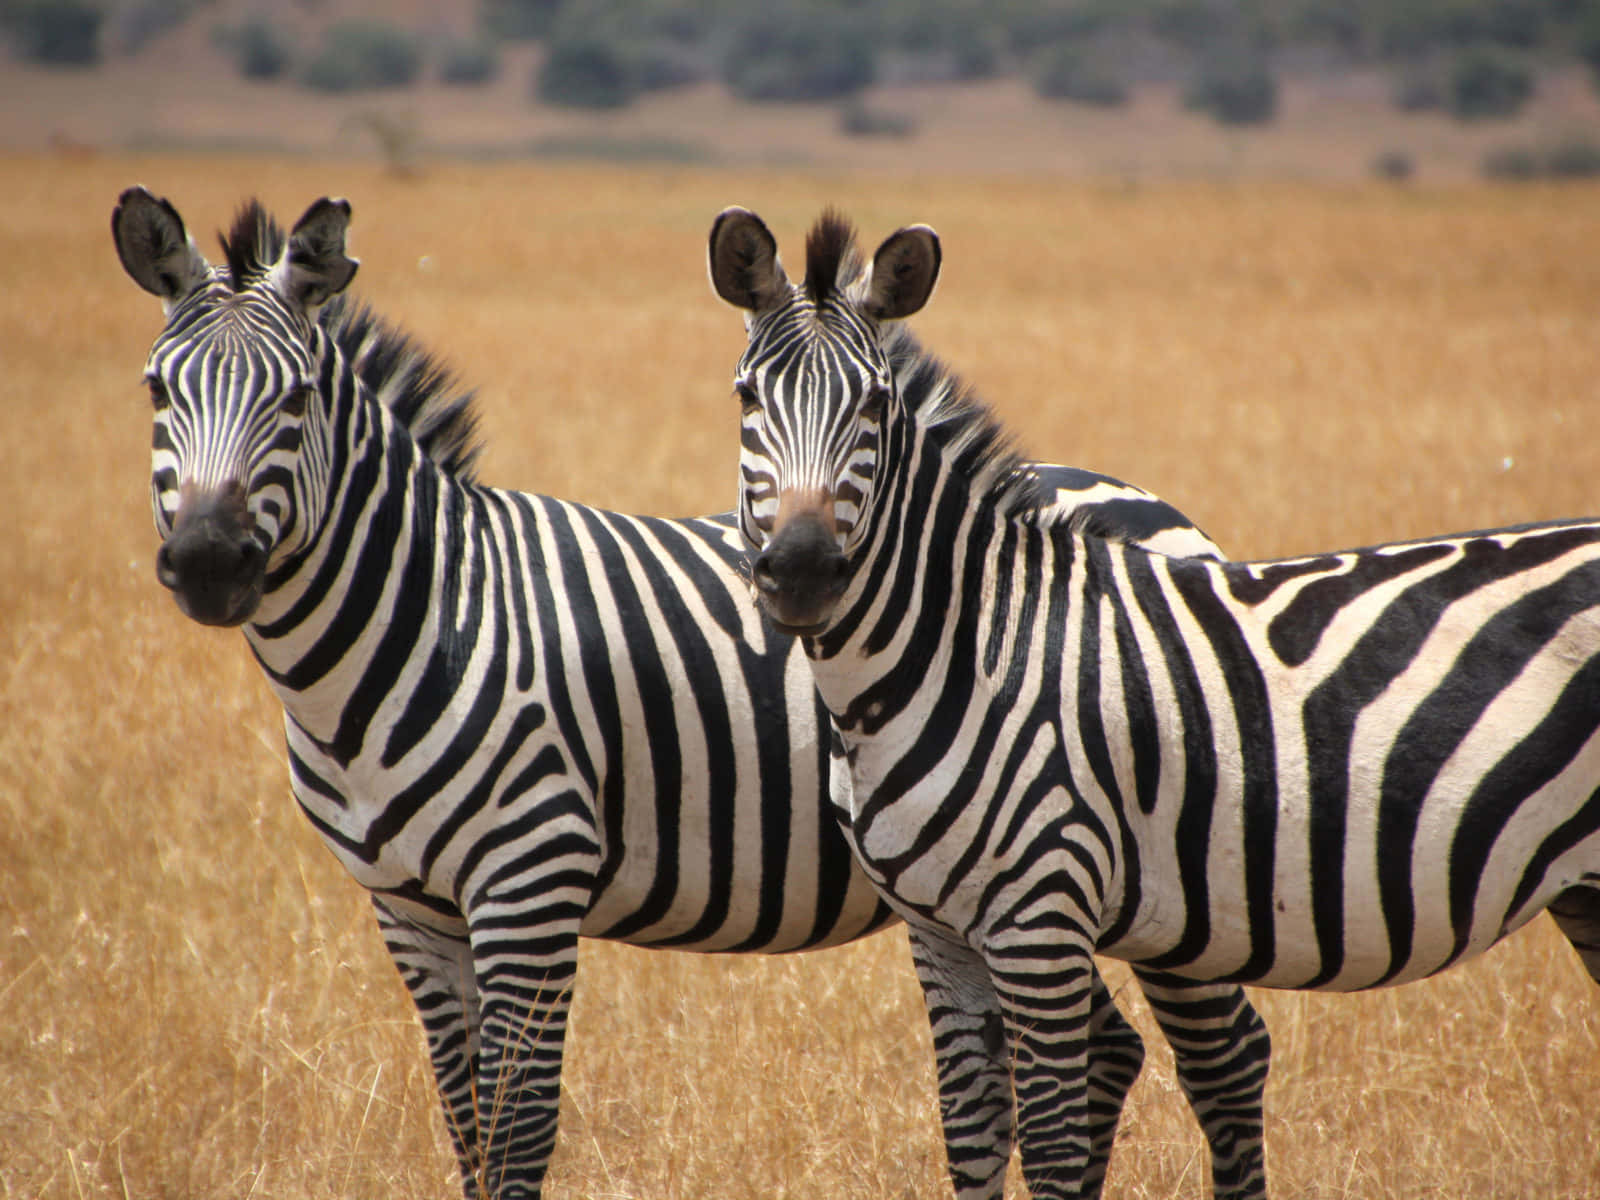 A black and white zebra grazing in the savanna.